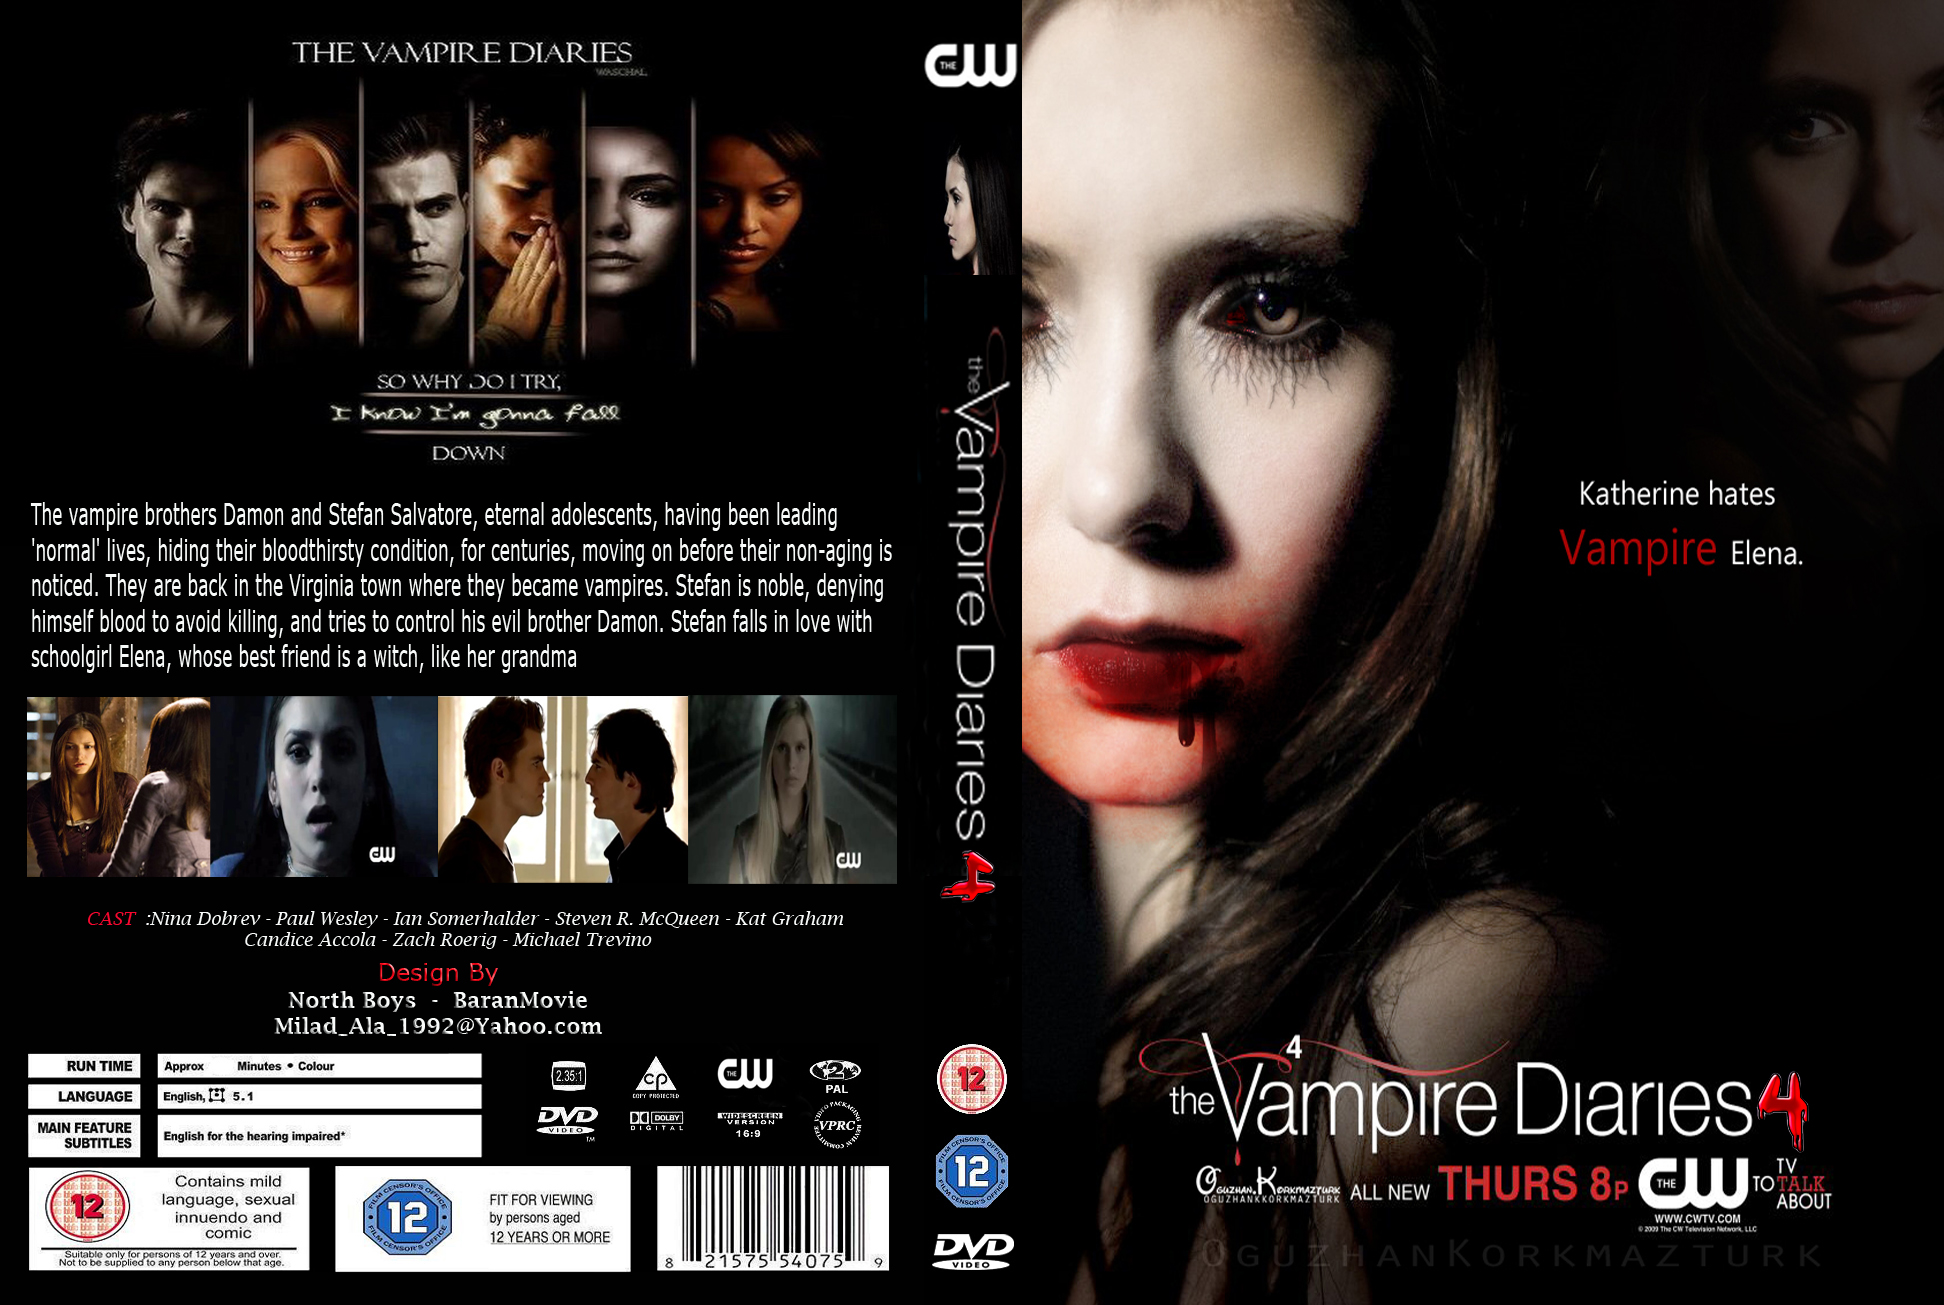 The vampire diaries in english. Дневники вампира обложки для двд русская версия. Дневники вампира обложка DVD.